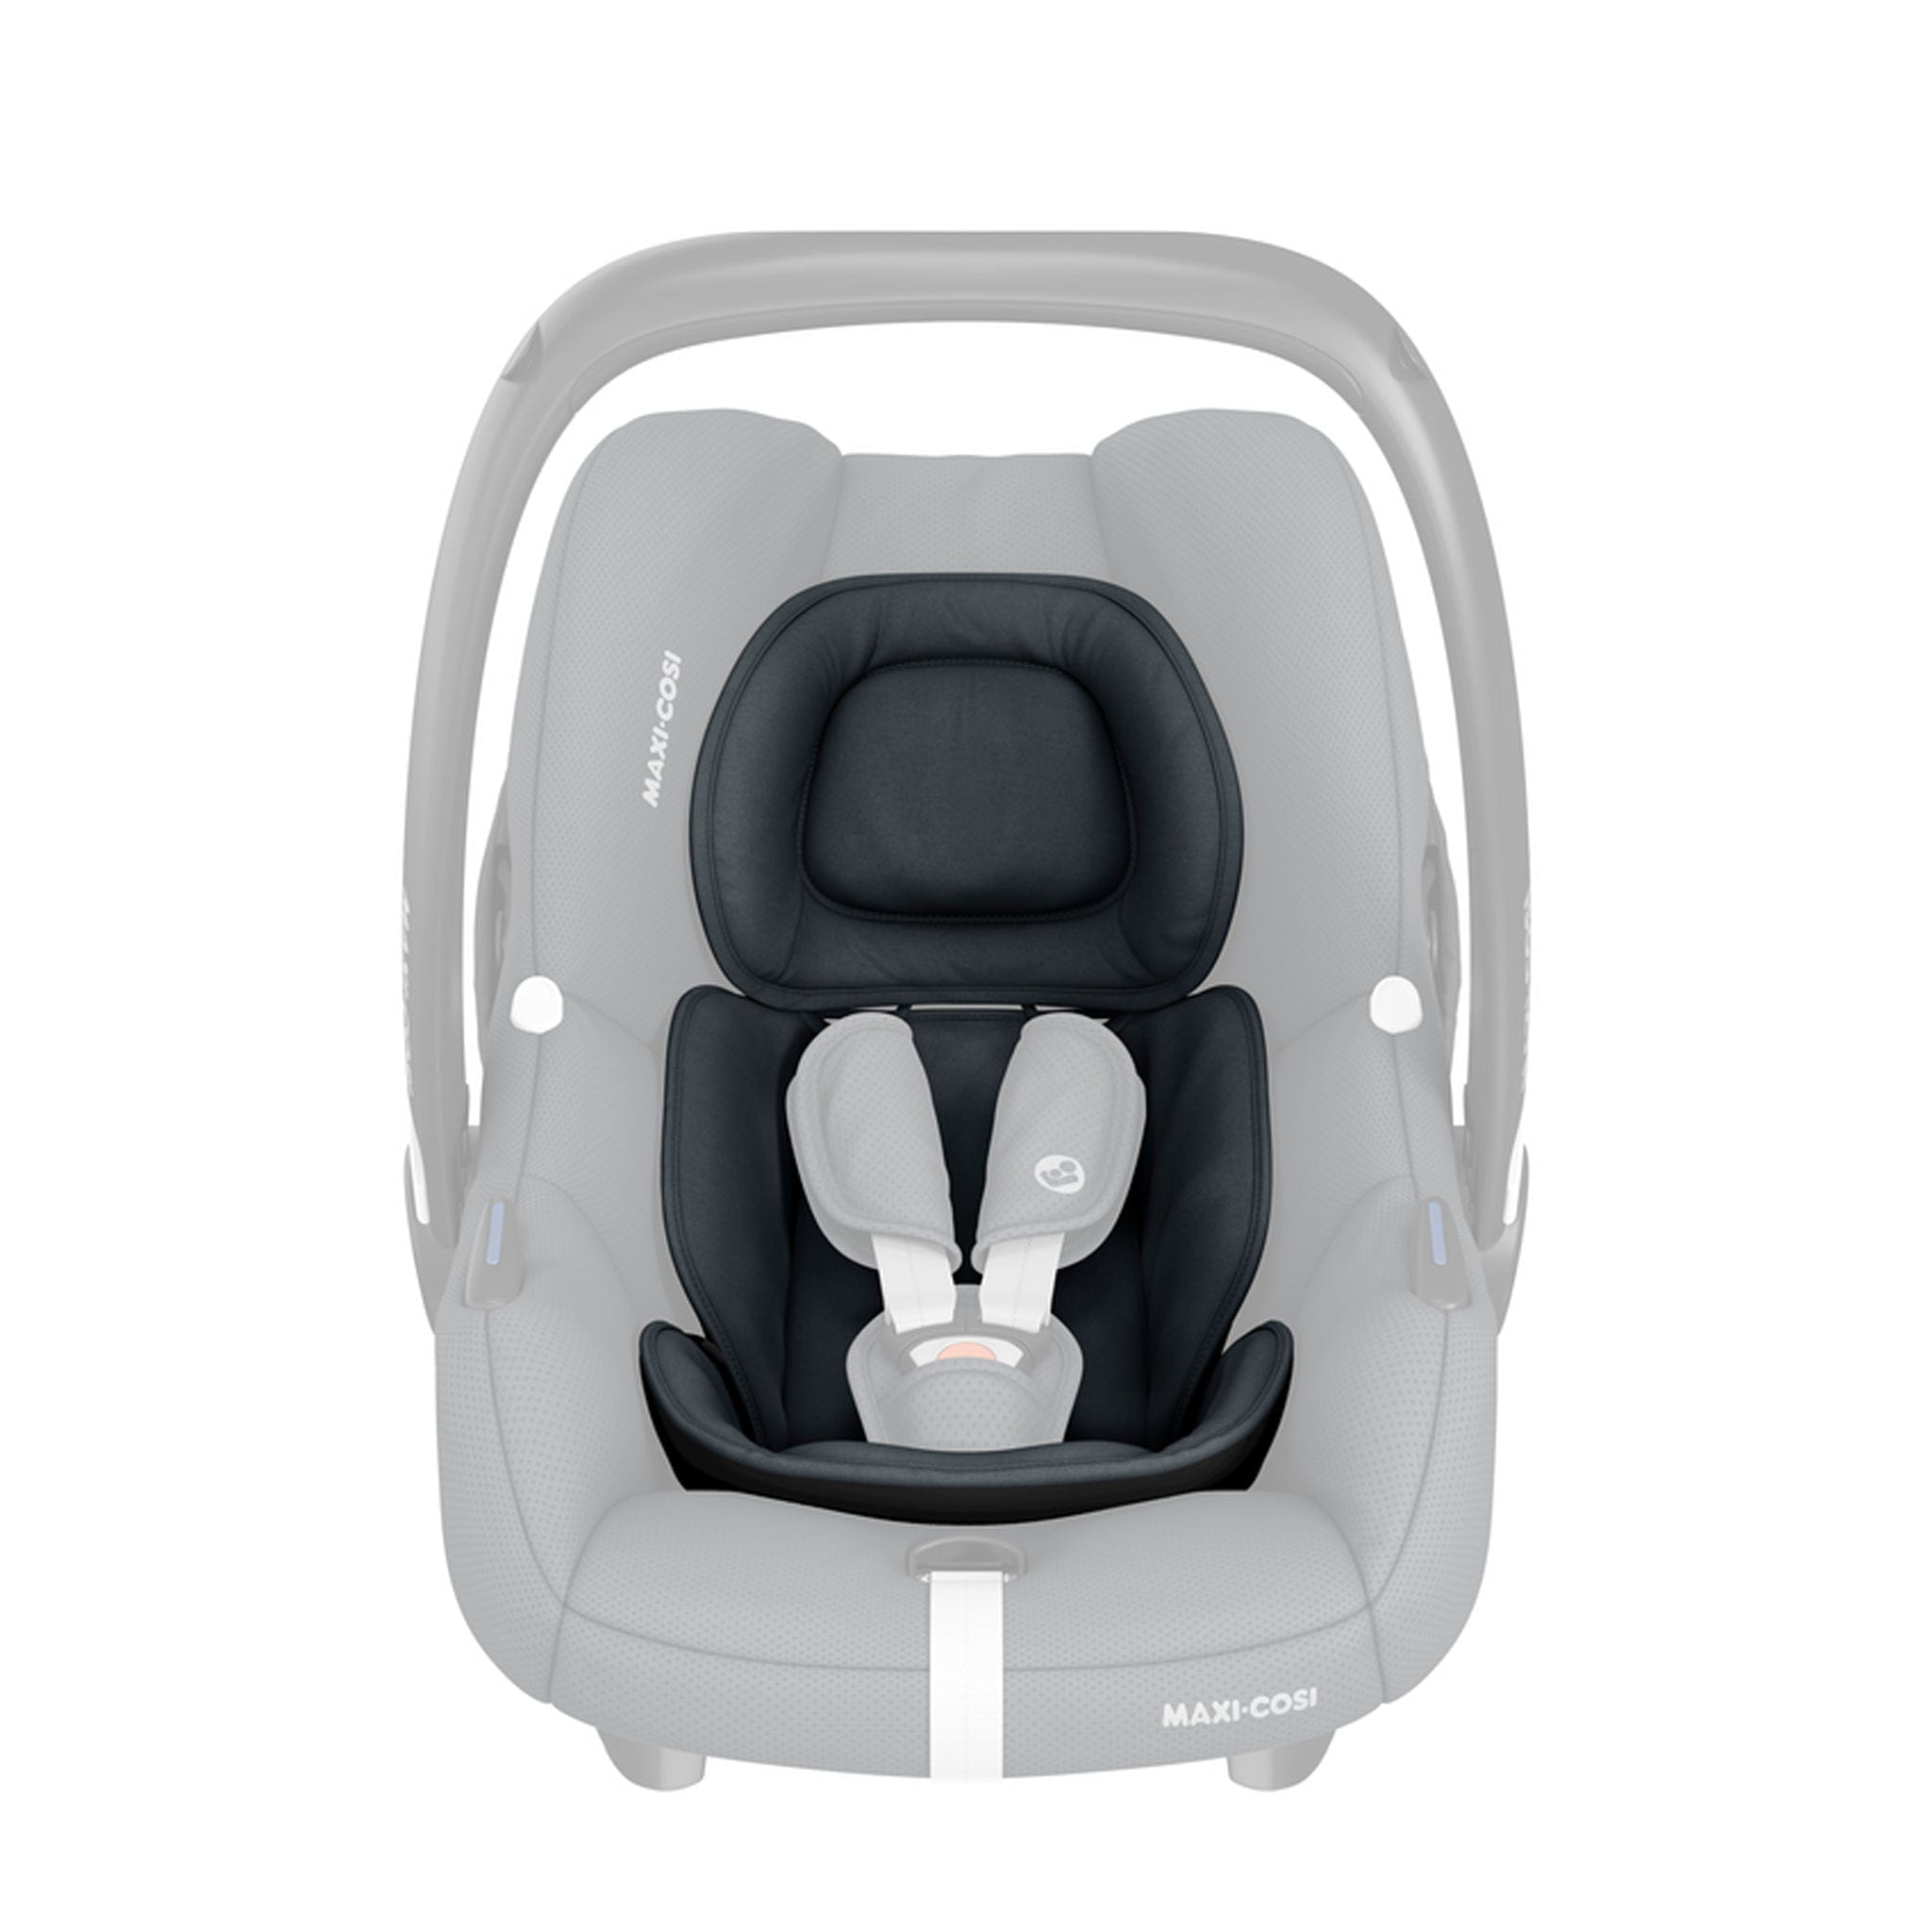 Maxi-Cosi i-Size car seats Maxi-Cosi CabrioFix i-Size Car Seat in Essential Graphite